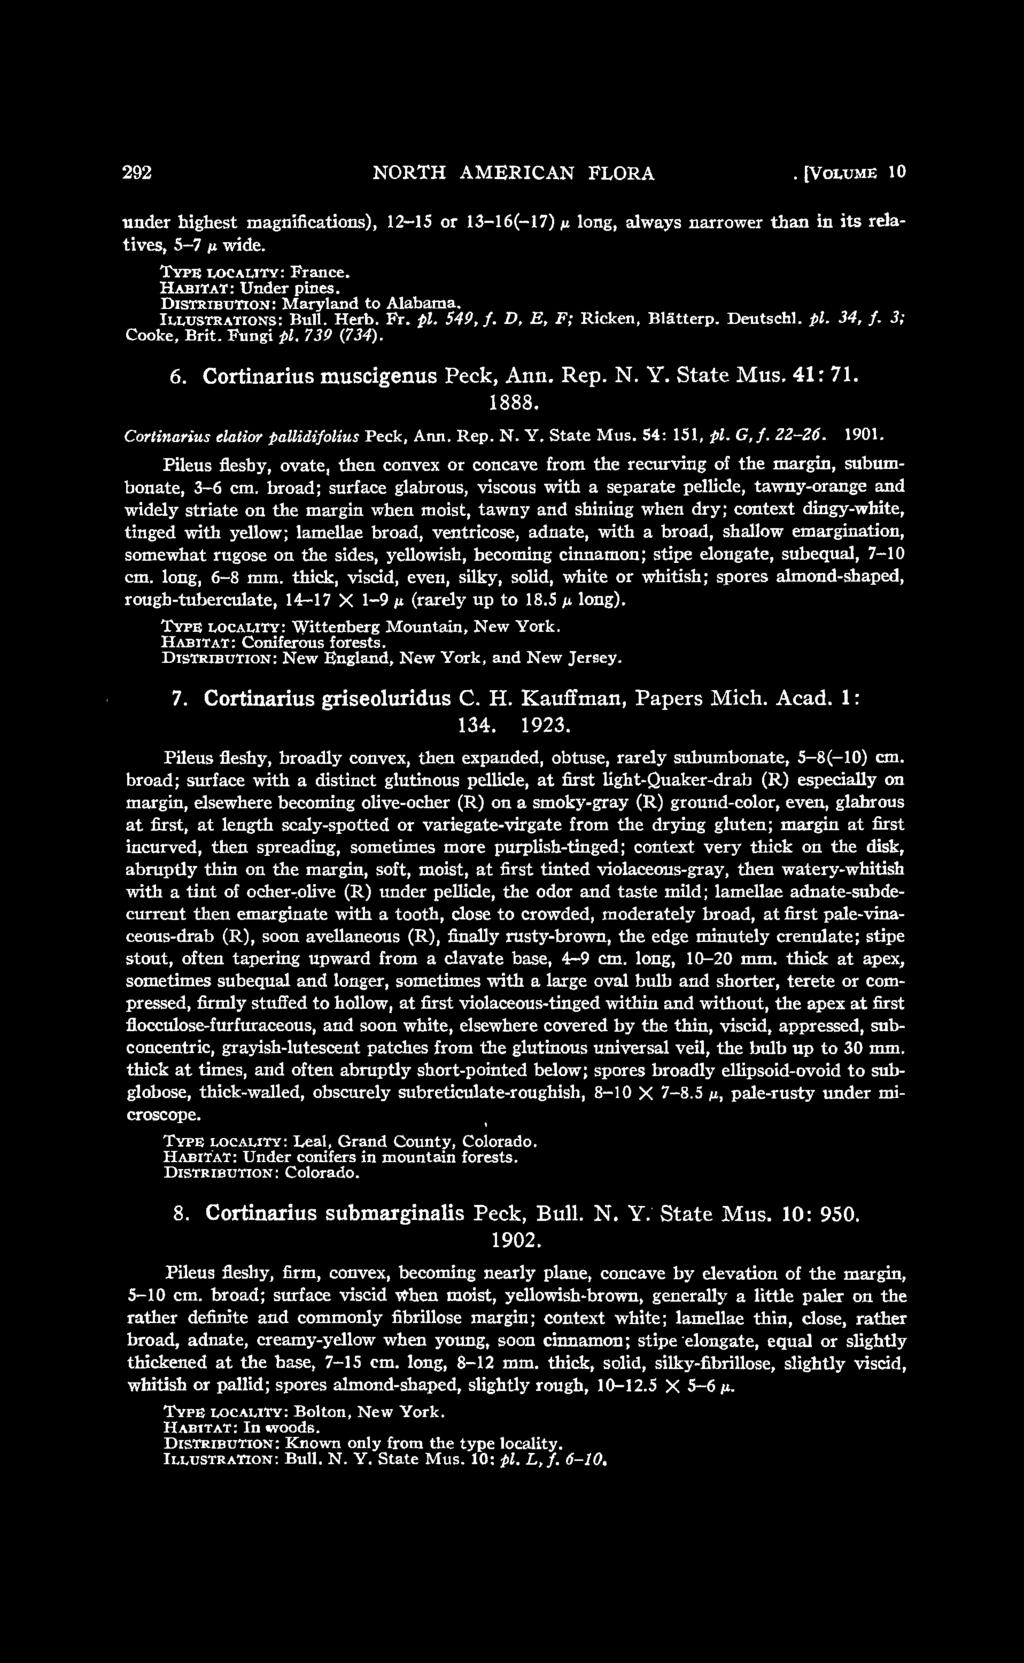 Rep. N. Y. State Mus. 41: 71. 1888. Cortinarius elatior pallidifolius Peck, Ann. Rep. N. Y. State Mus. 54: 151, pi. G,f. 22-26. 1901.